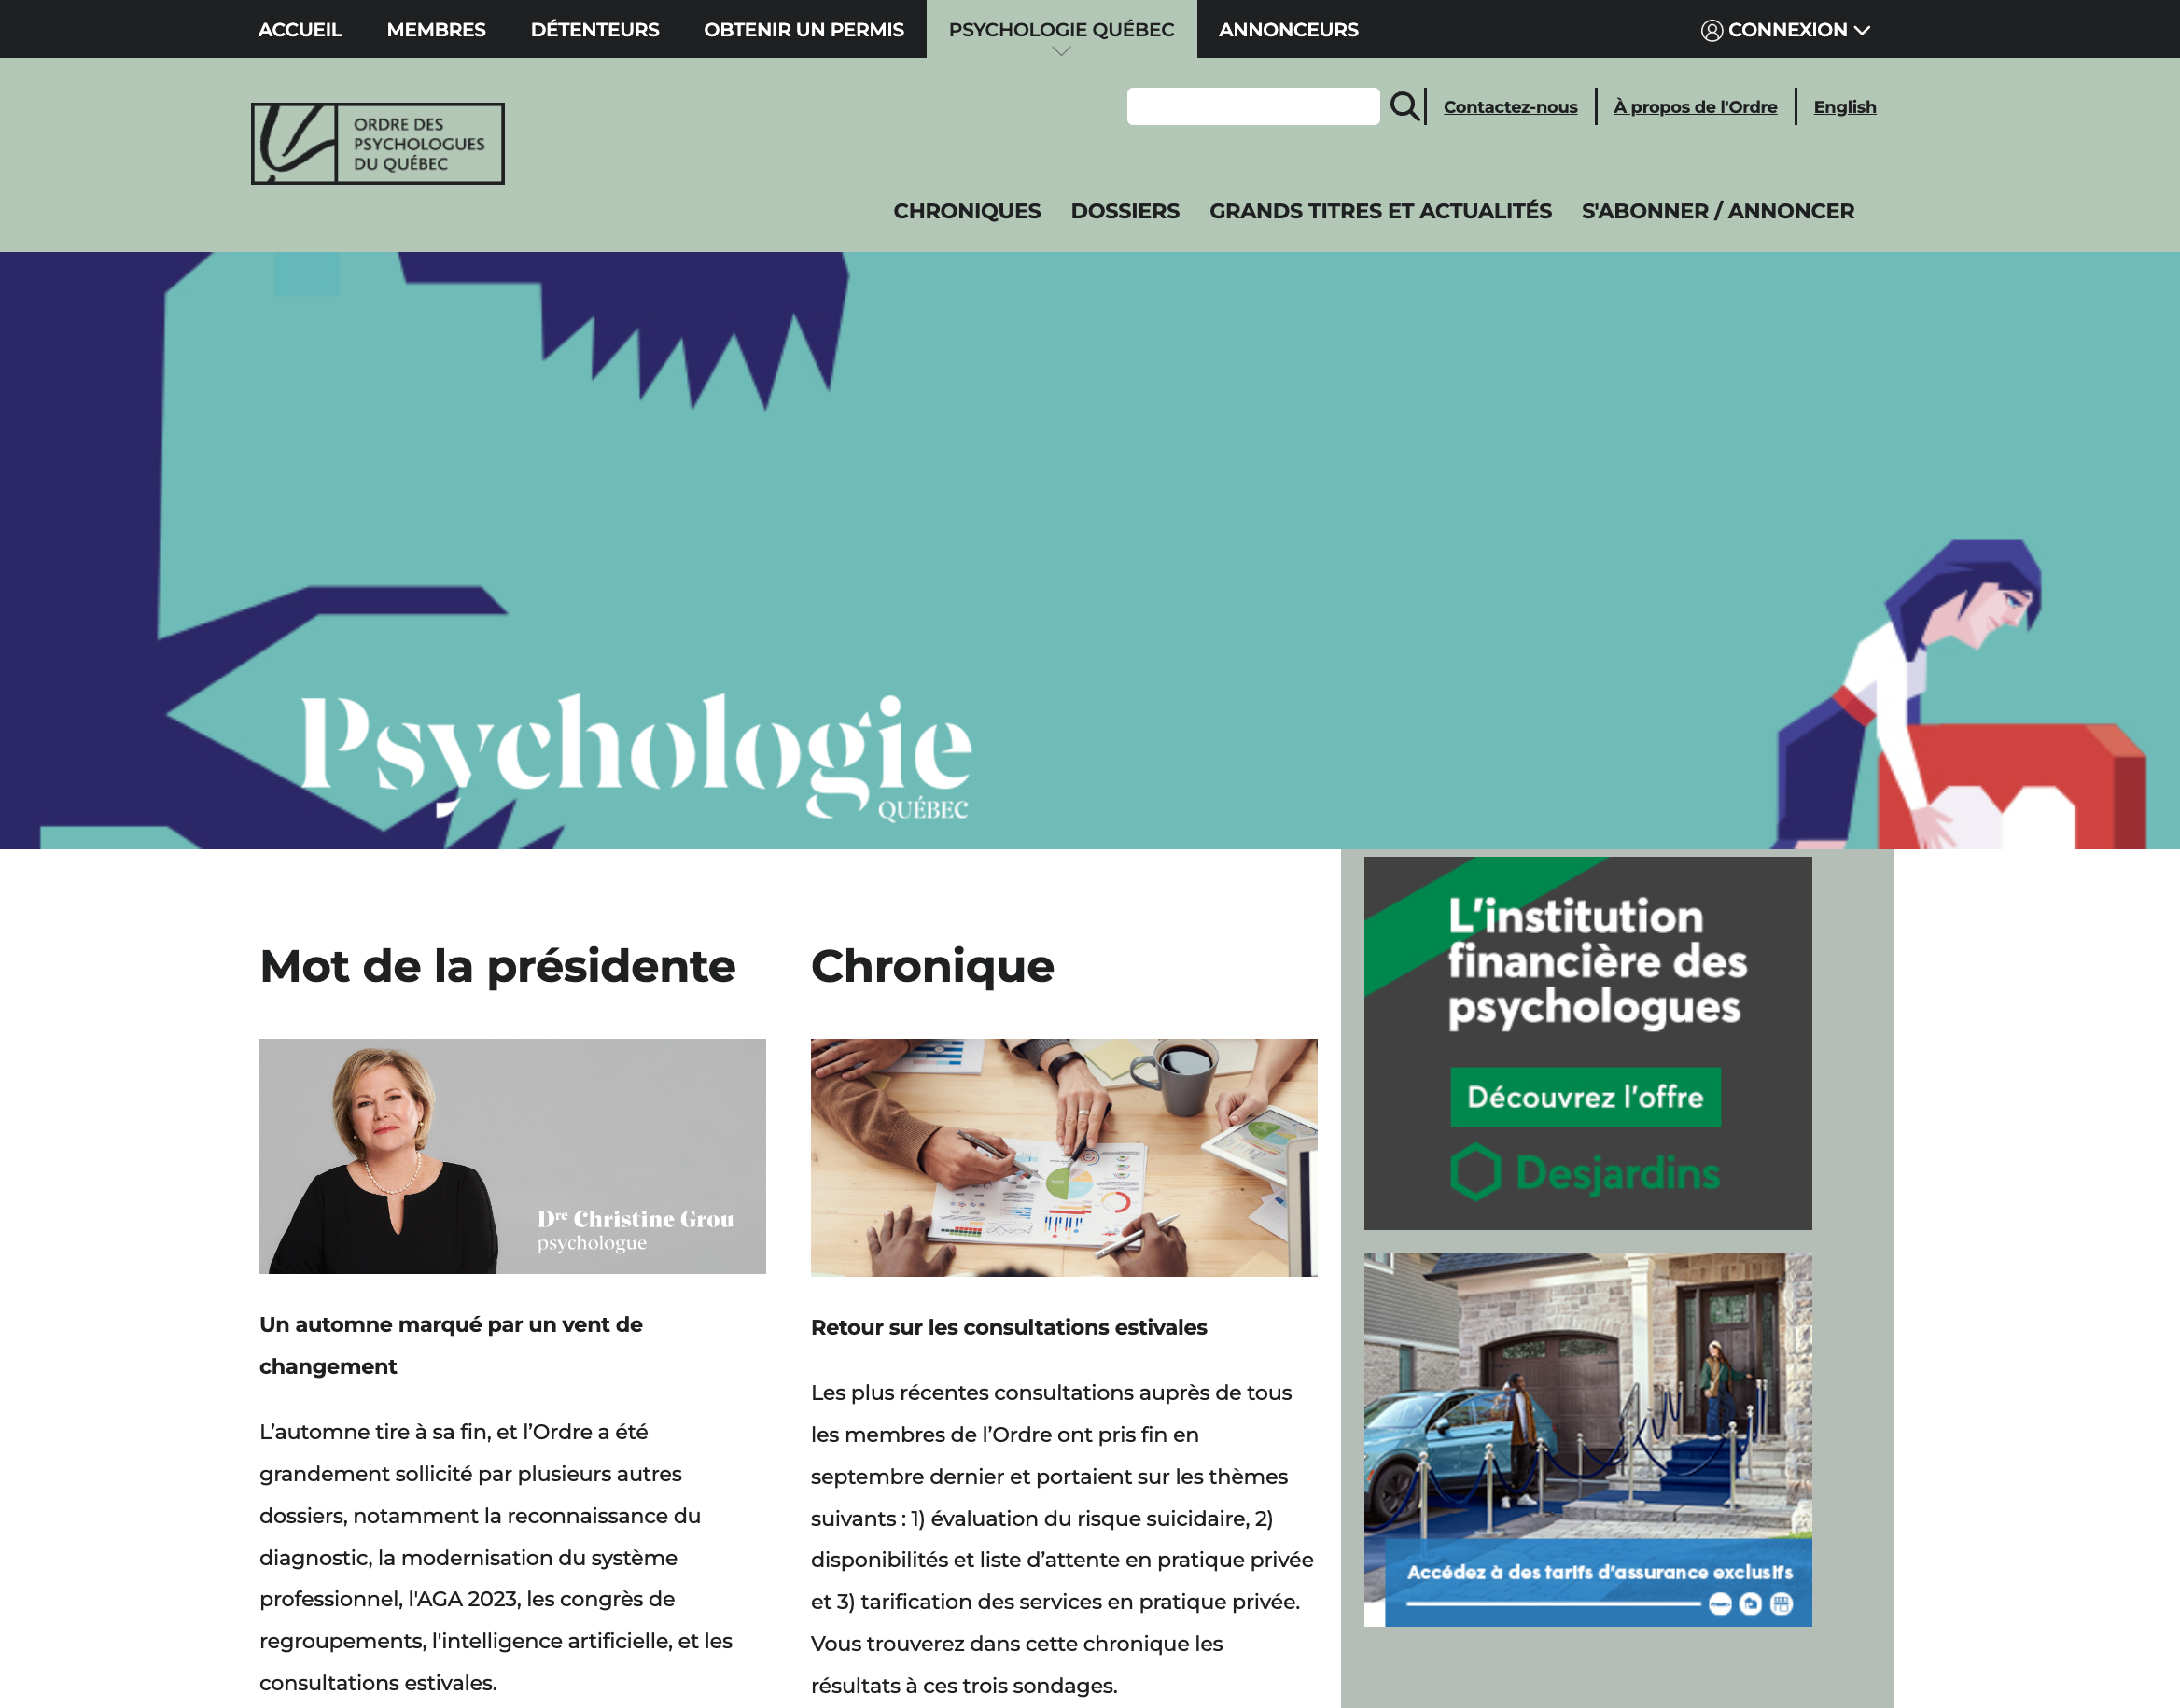 Magazine Psychologie Québec OPQ, Liferay